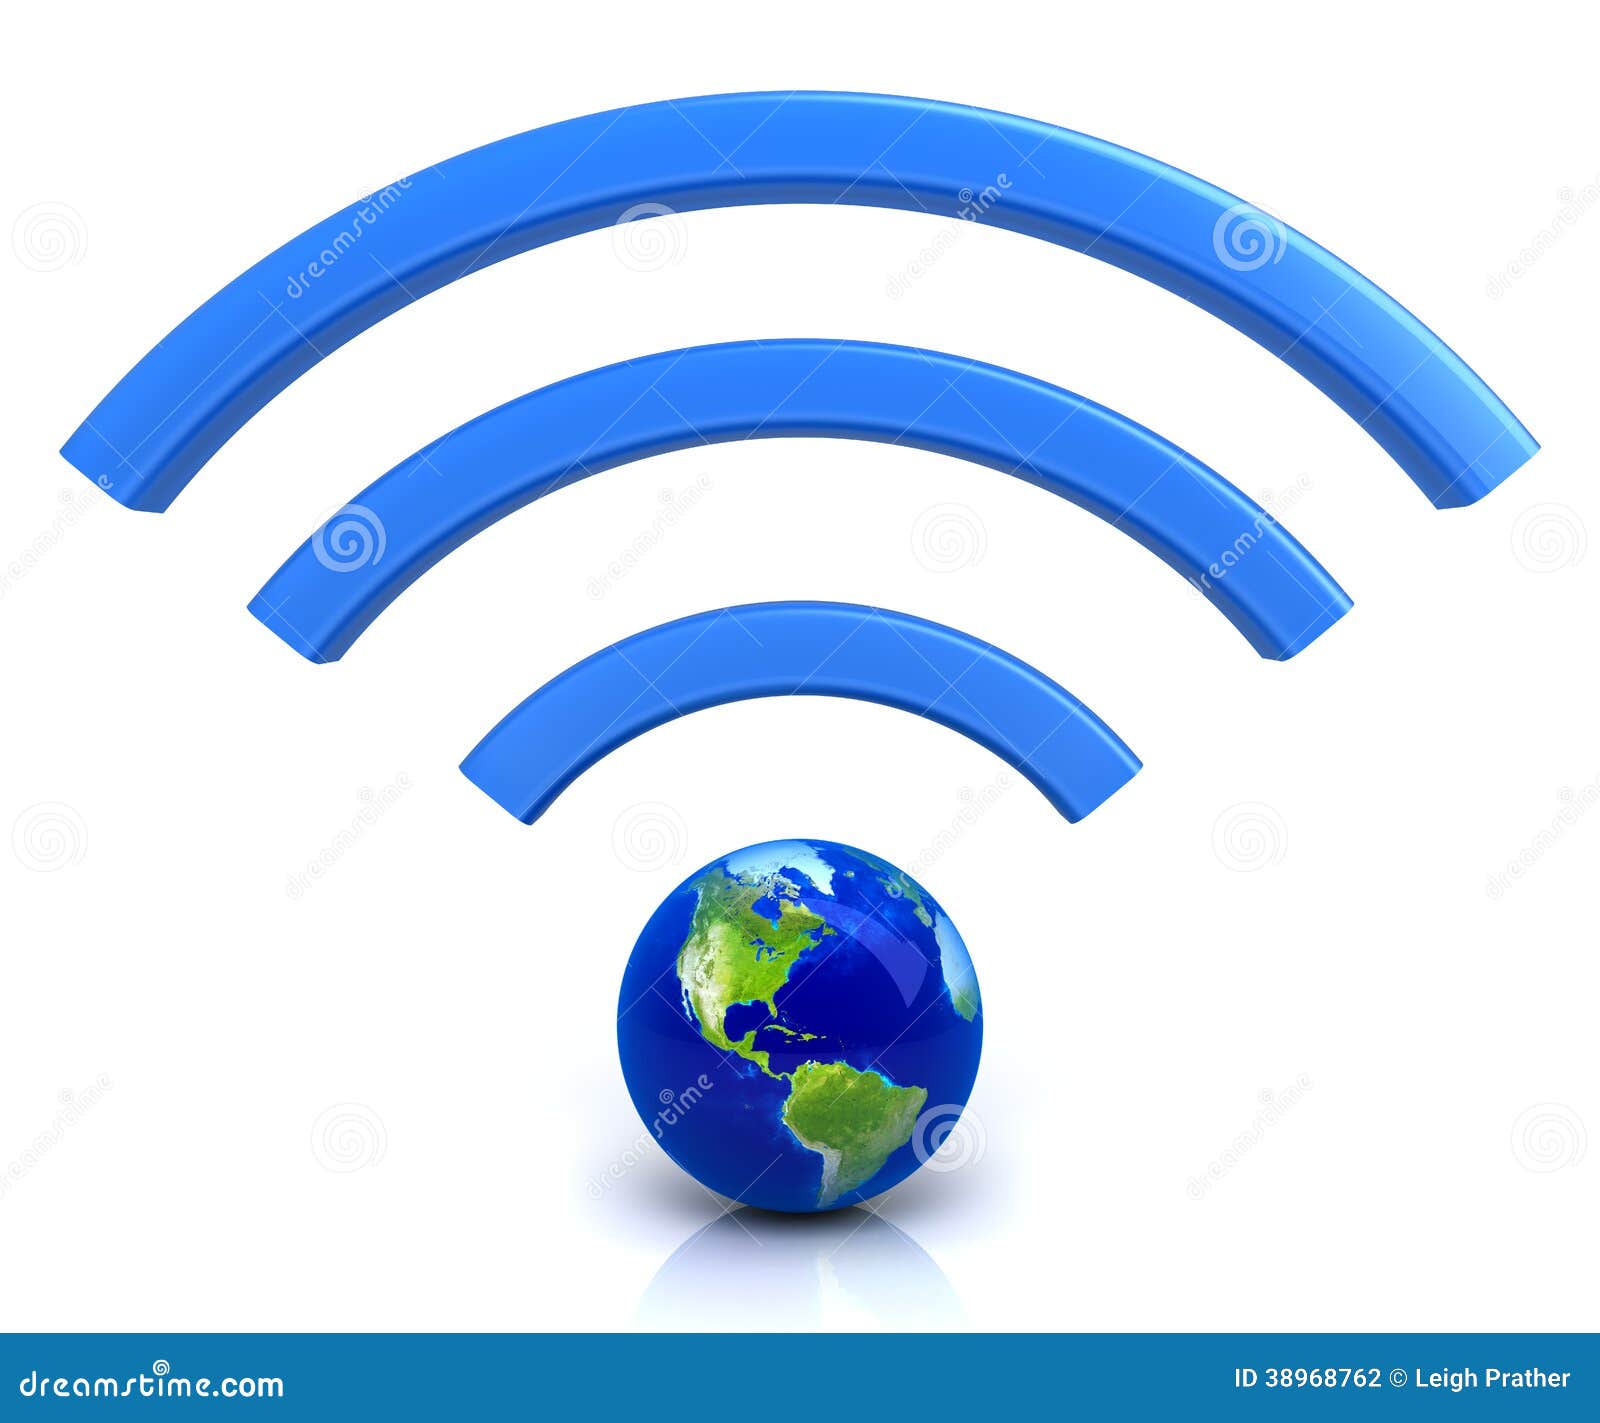 global wifi